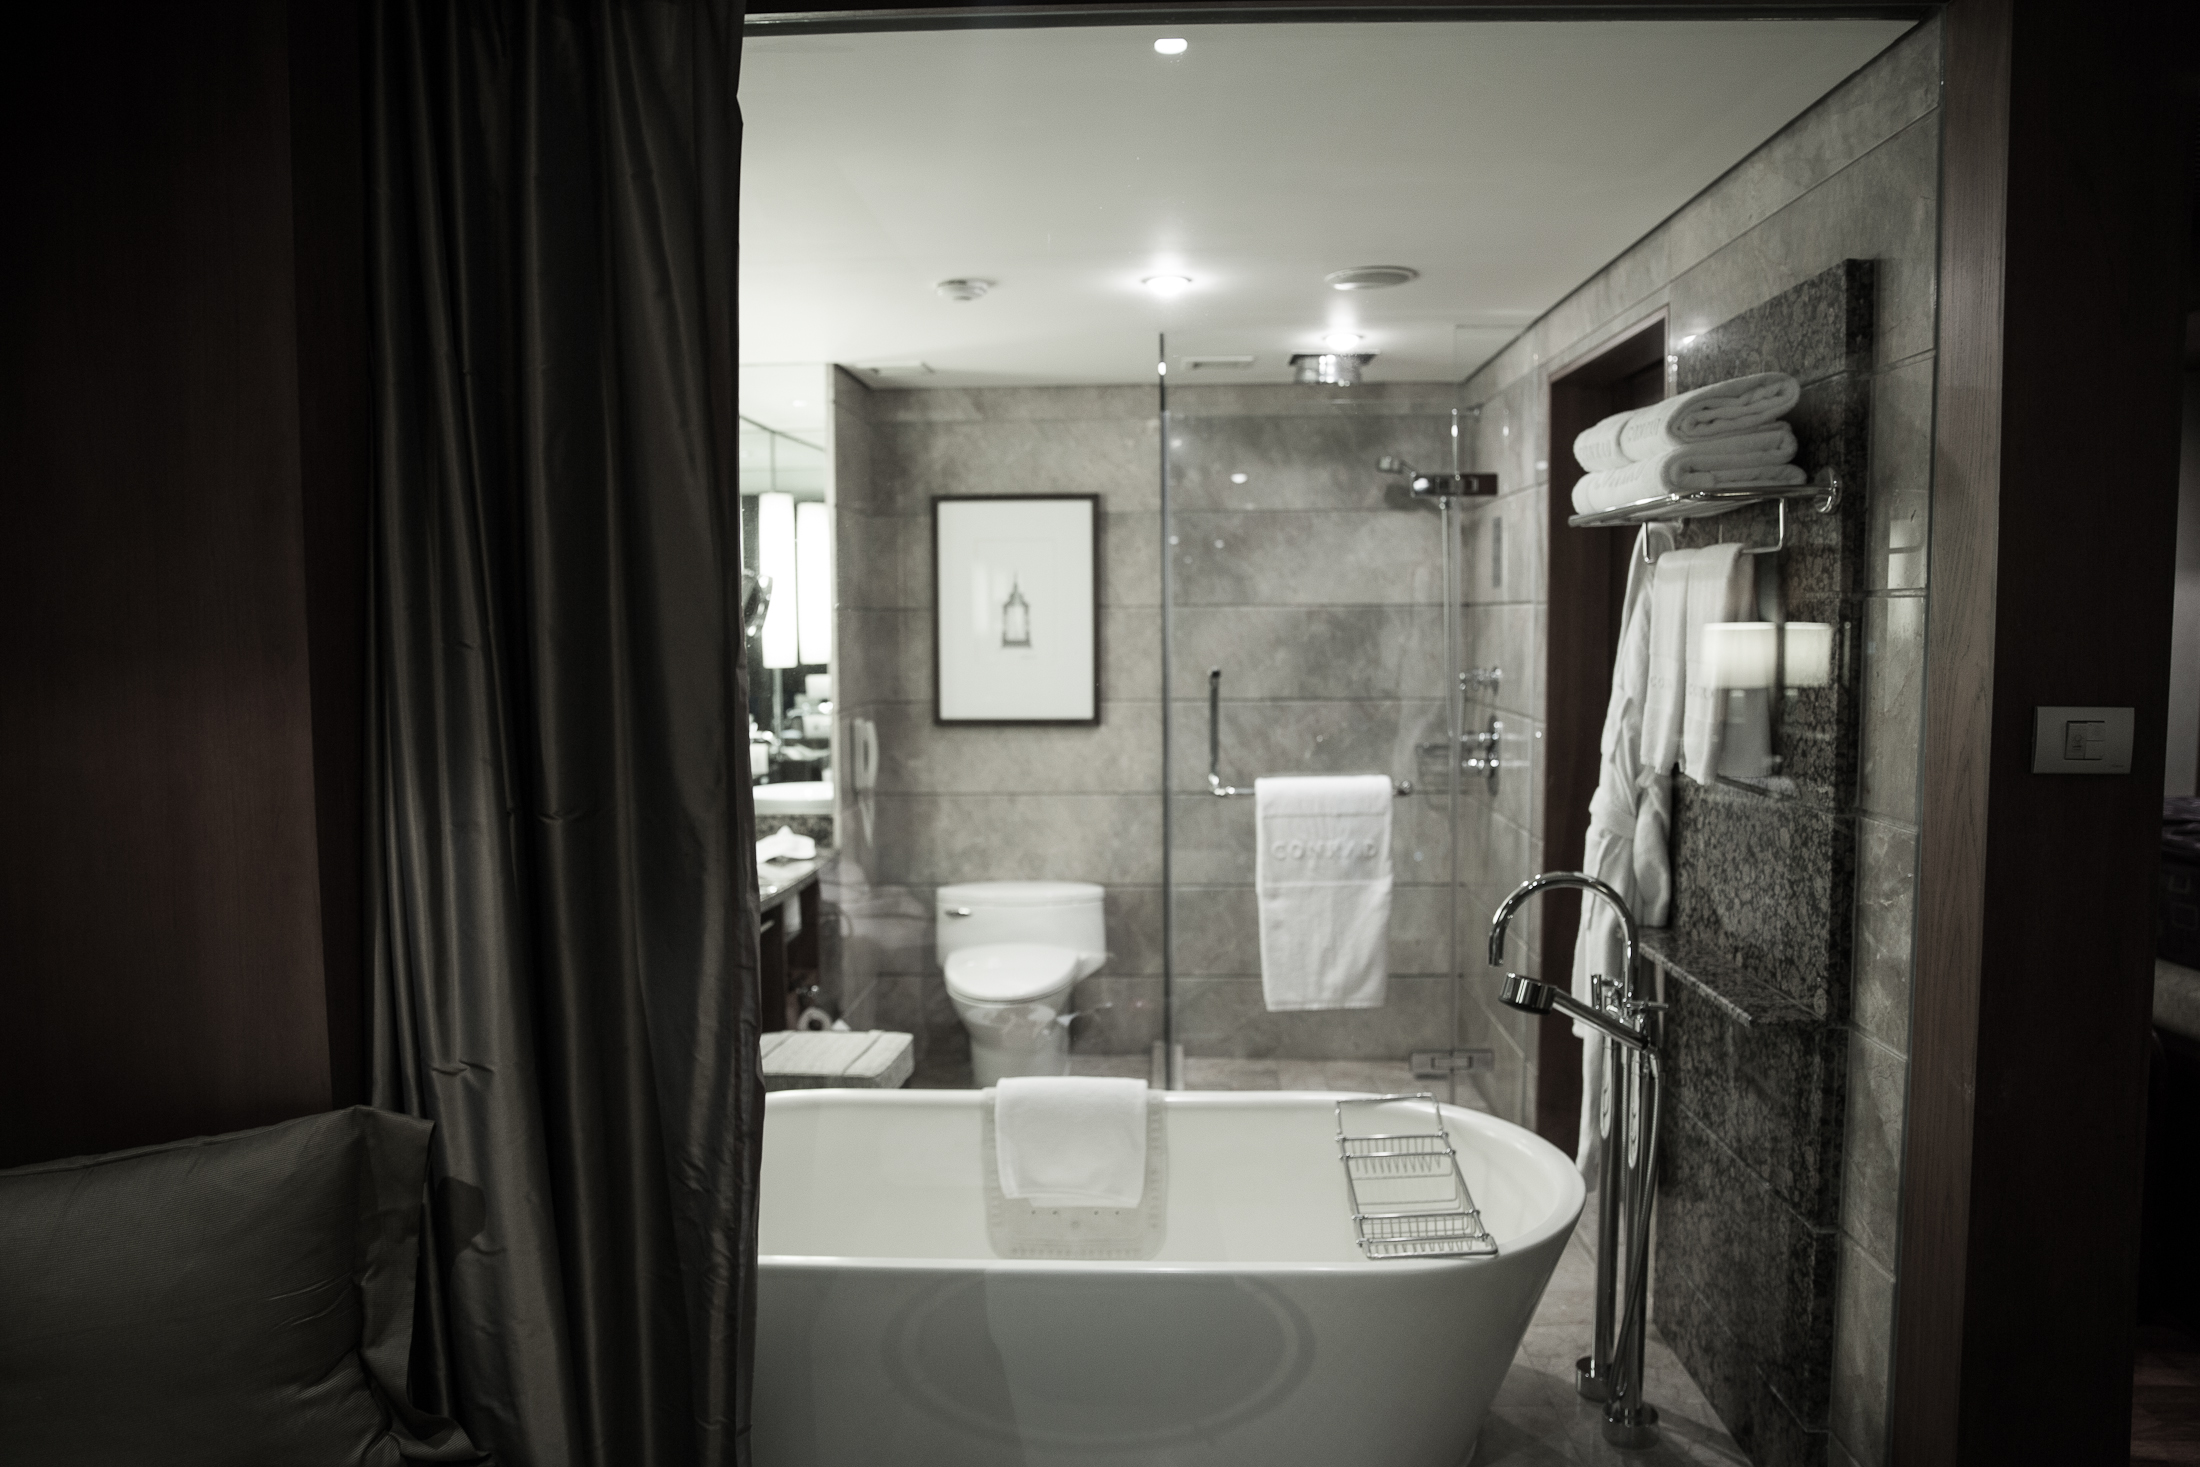 sher she goes thailand conrad hotel bangkok luxury southeast asia room tub bathroom